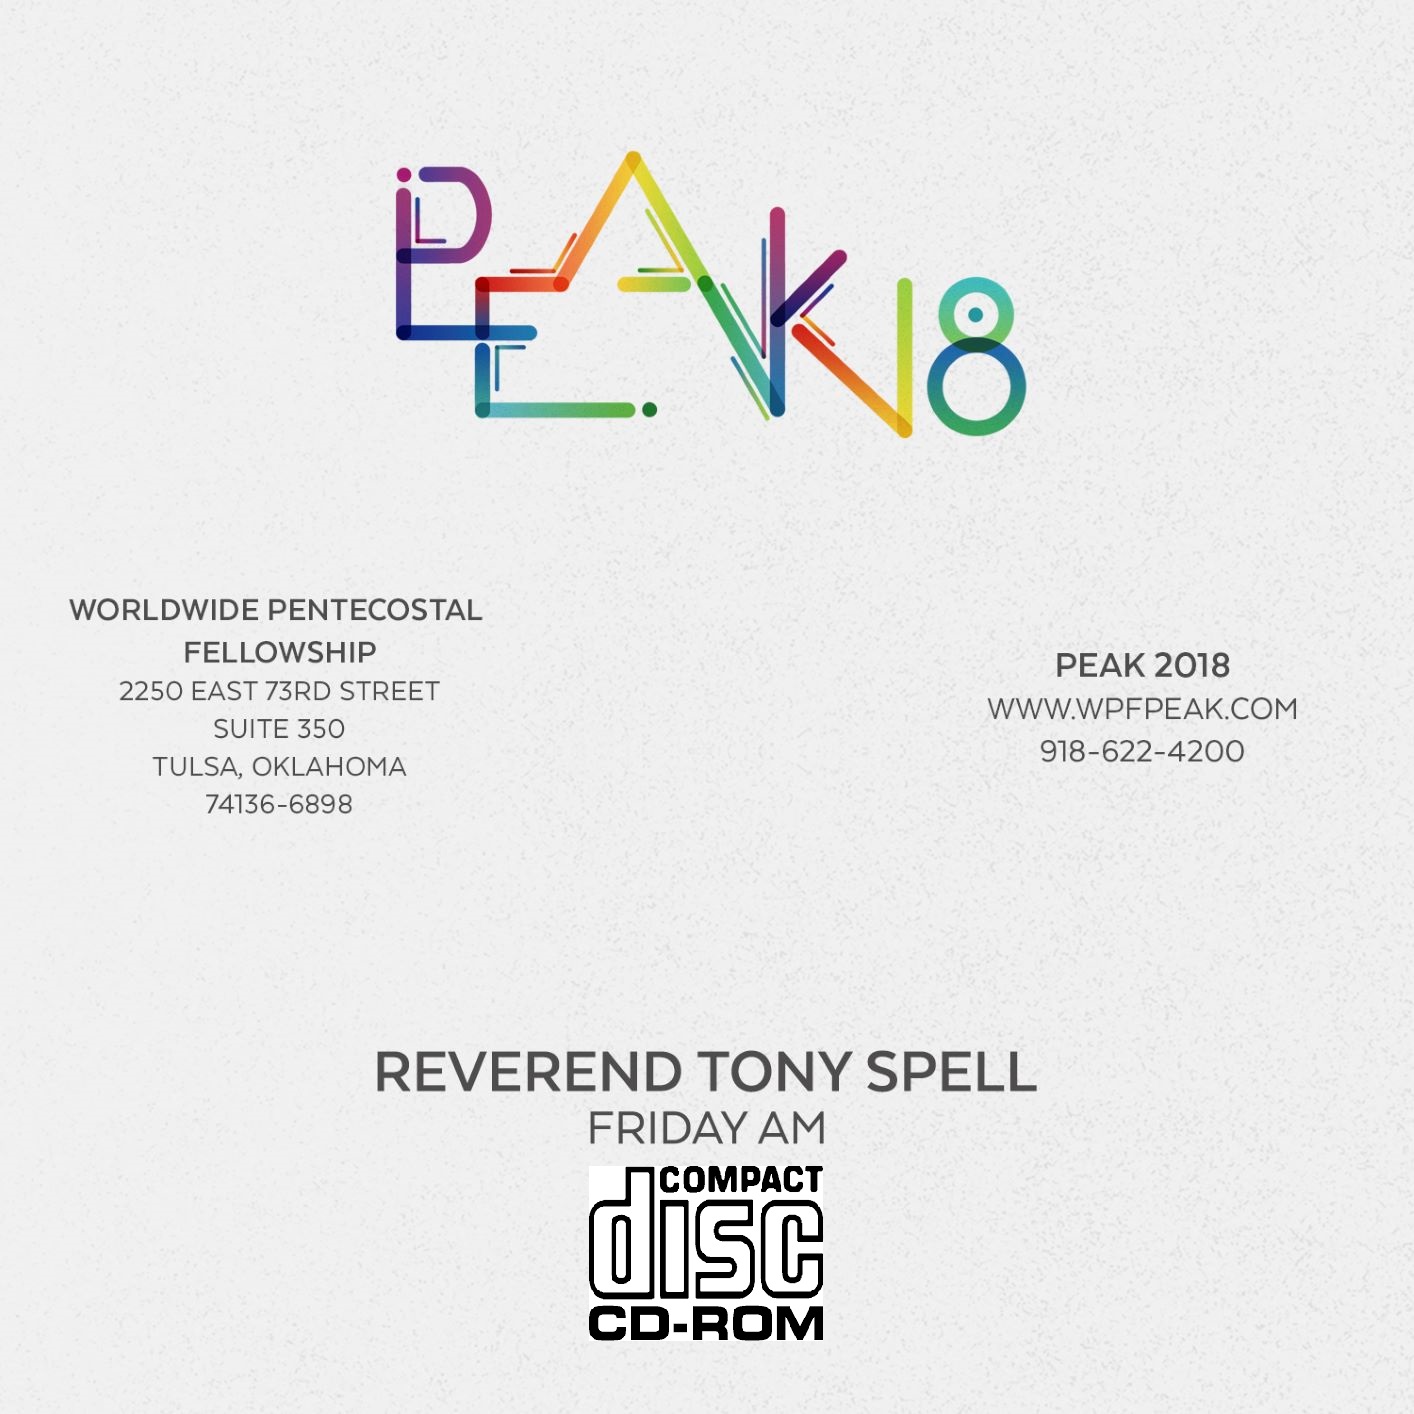 2018 PEAK Rev. Tony Spell (CD)